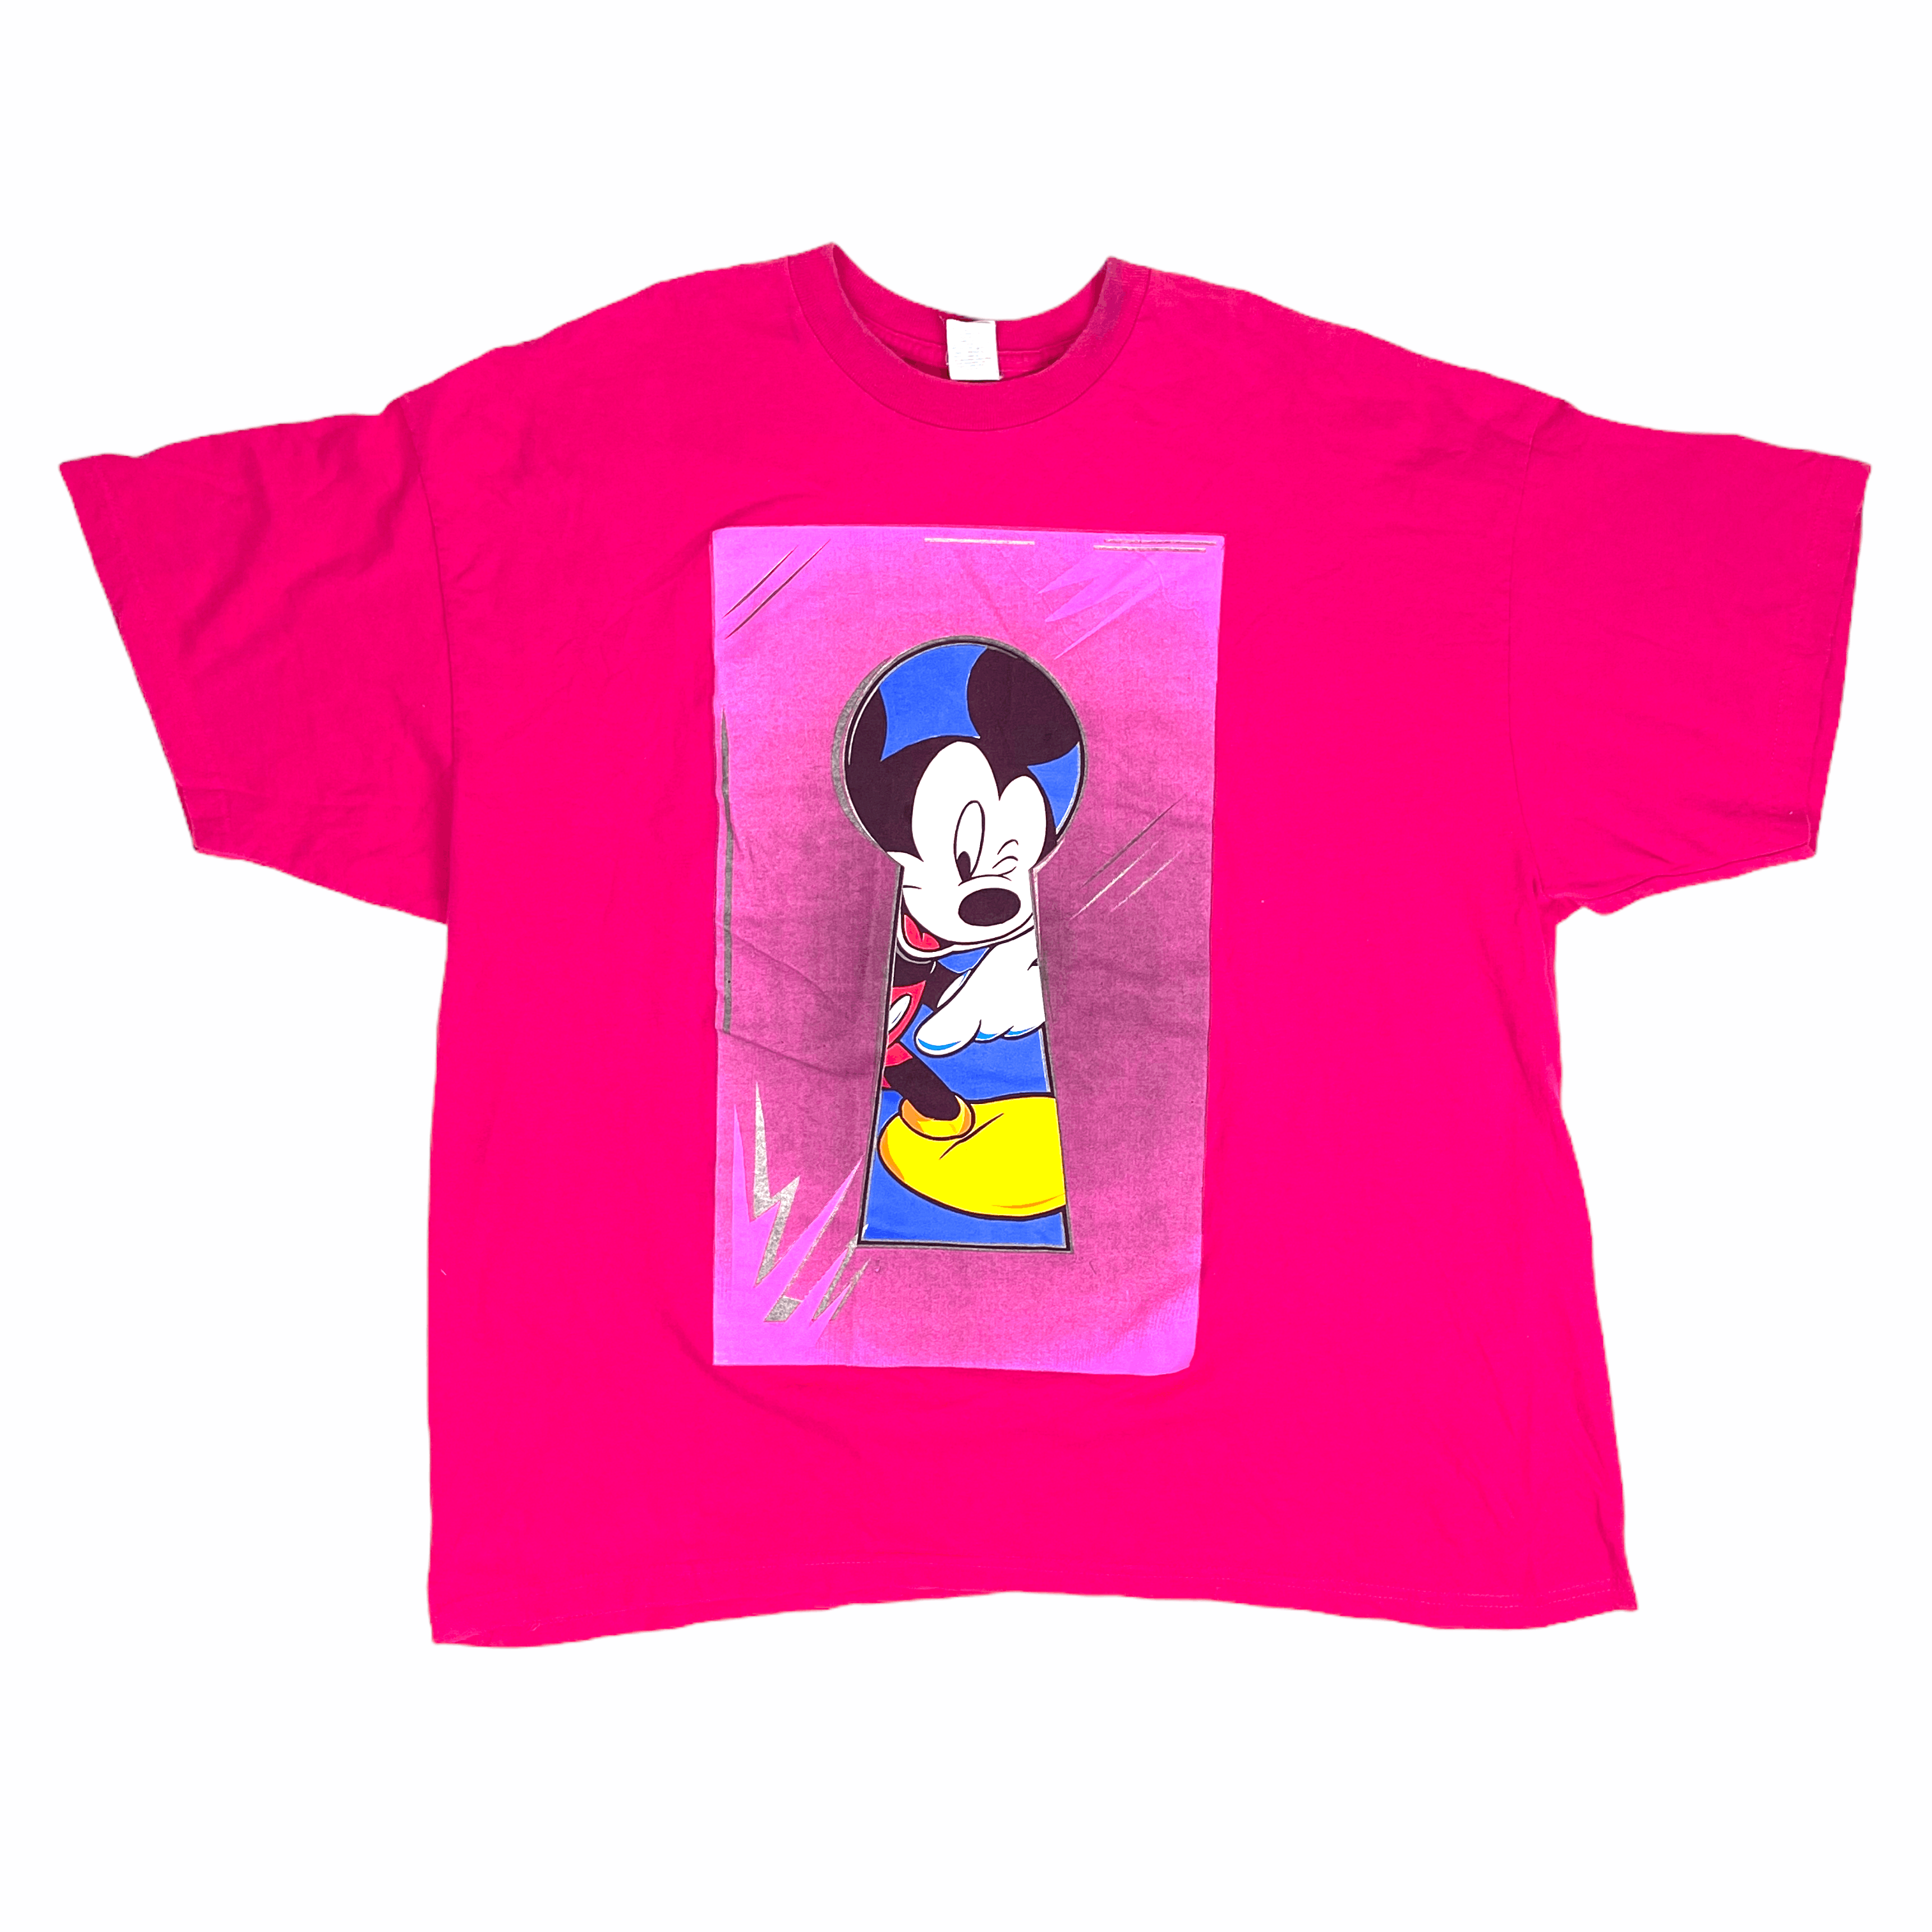 Vintage Vintage 90s Disney Mickey Mouse Key Hole Pink Shirt Size XL Size US XL / EU 56 / 4 - 1 Preview